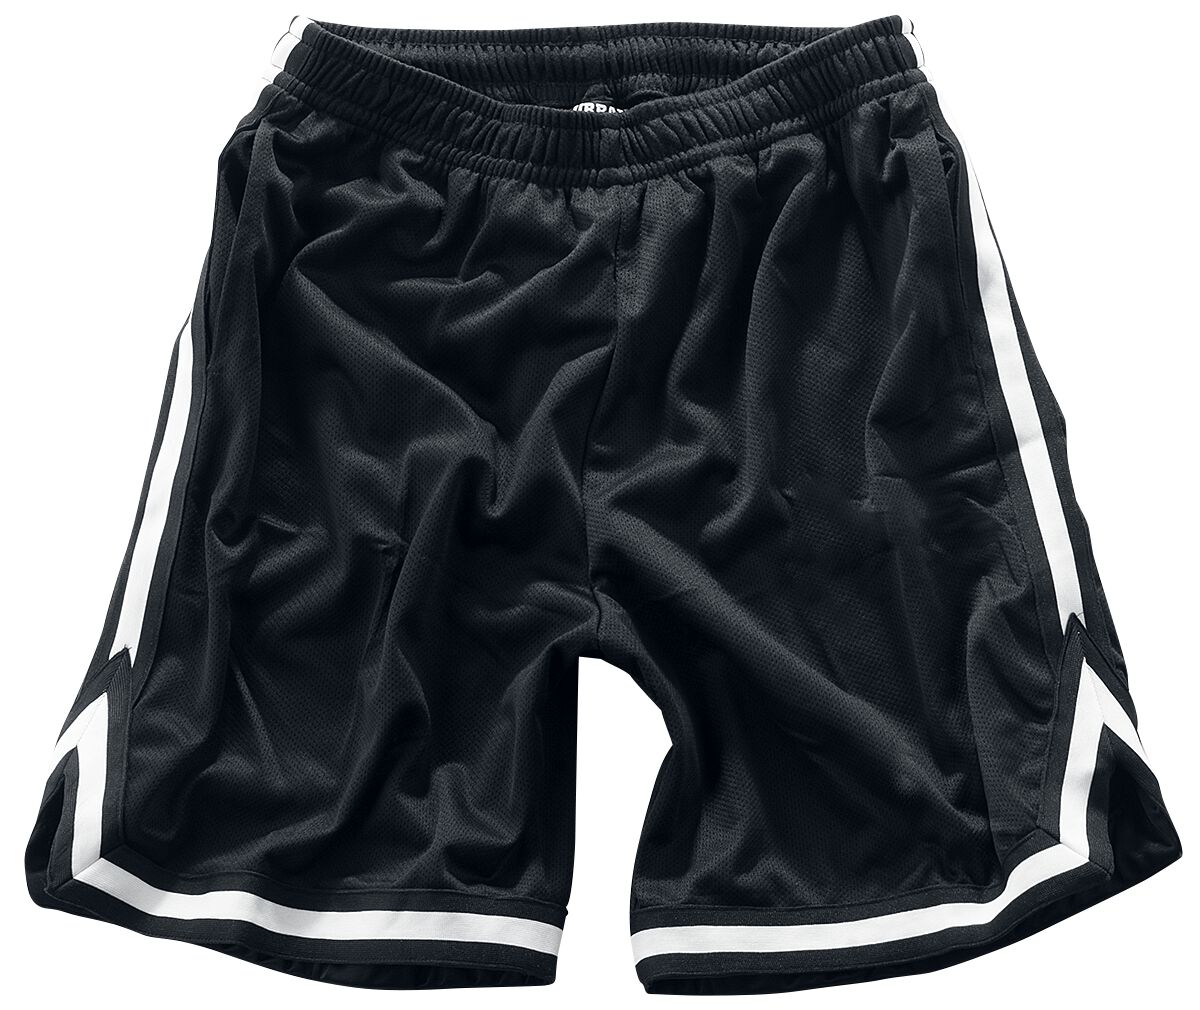 Image of Shorts di Urban Classics - Stripes Mesh Shorts - S a 3XL - Uomo - nero/bianco